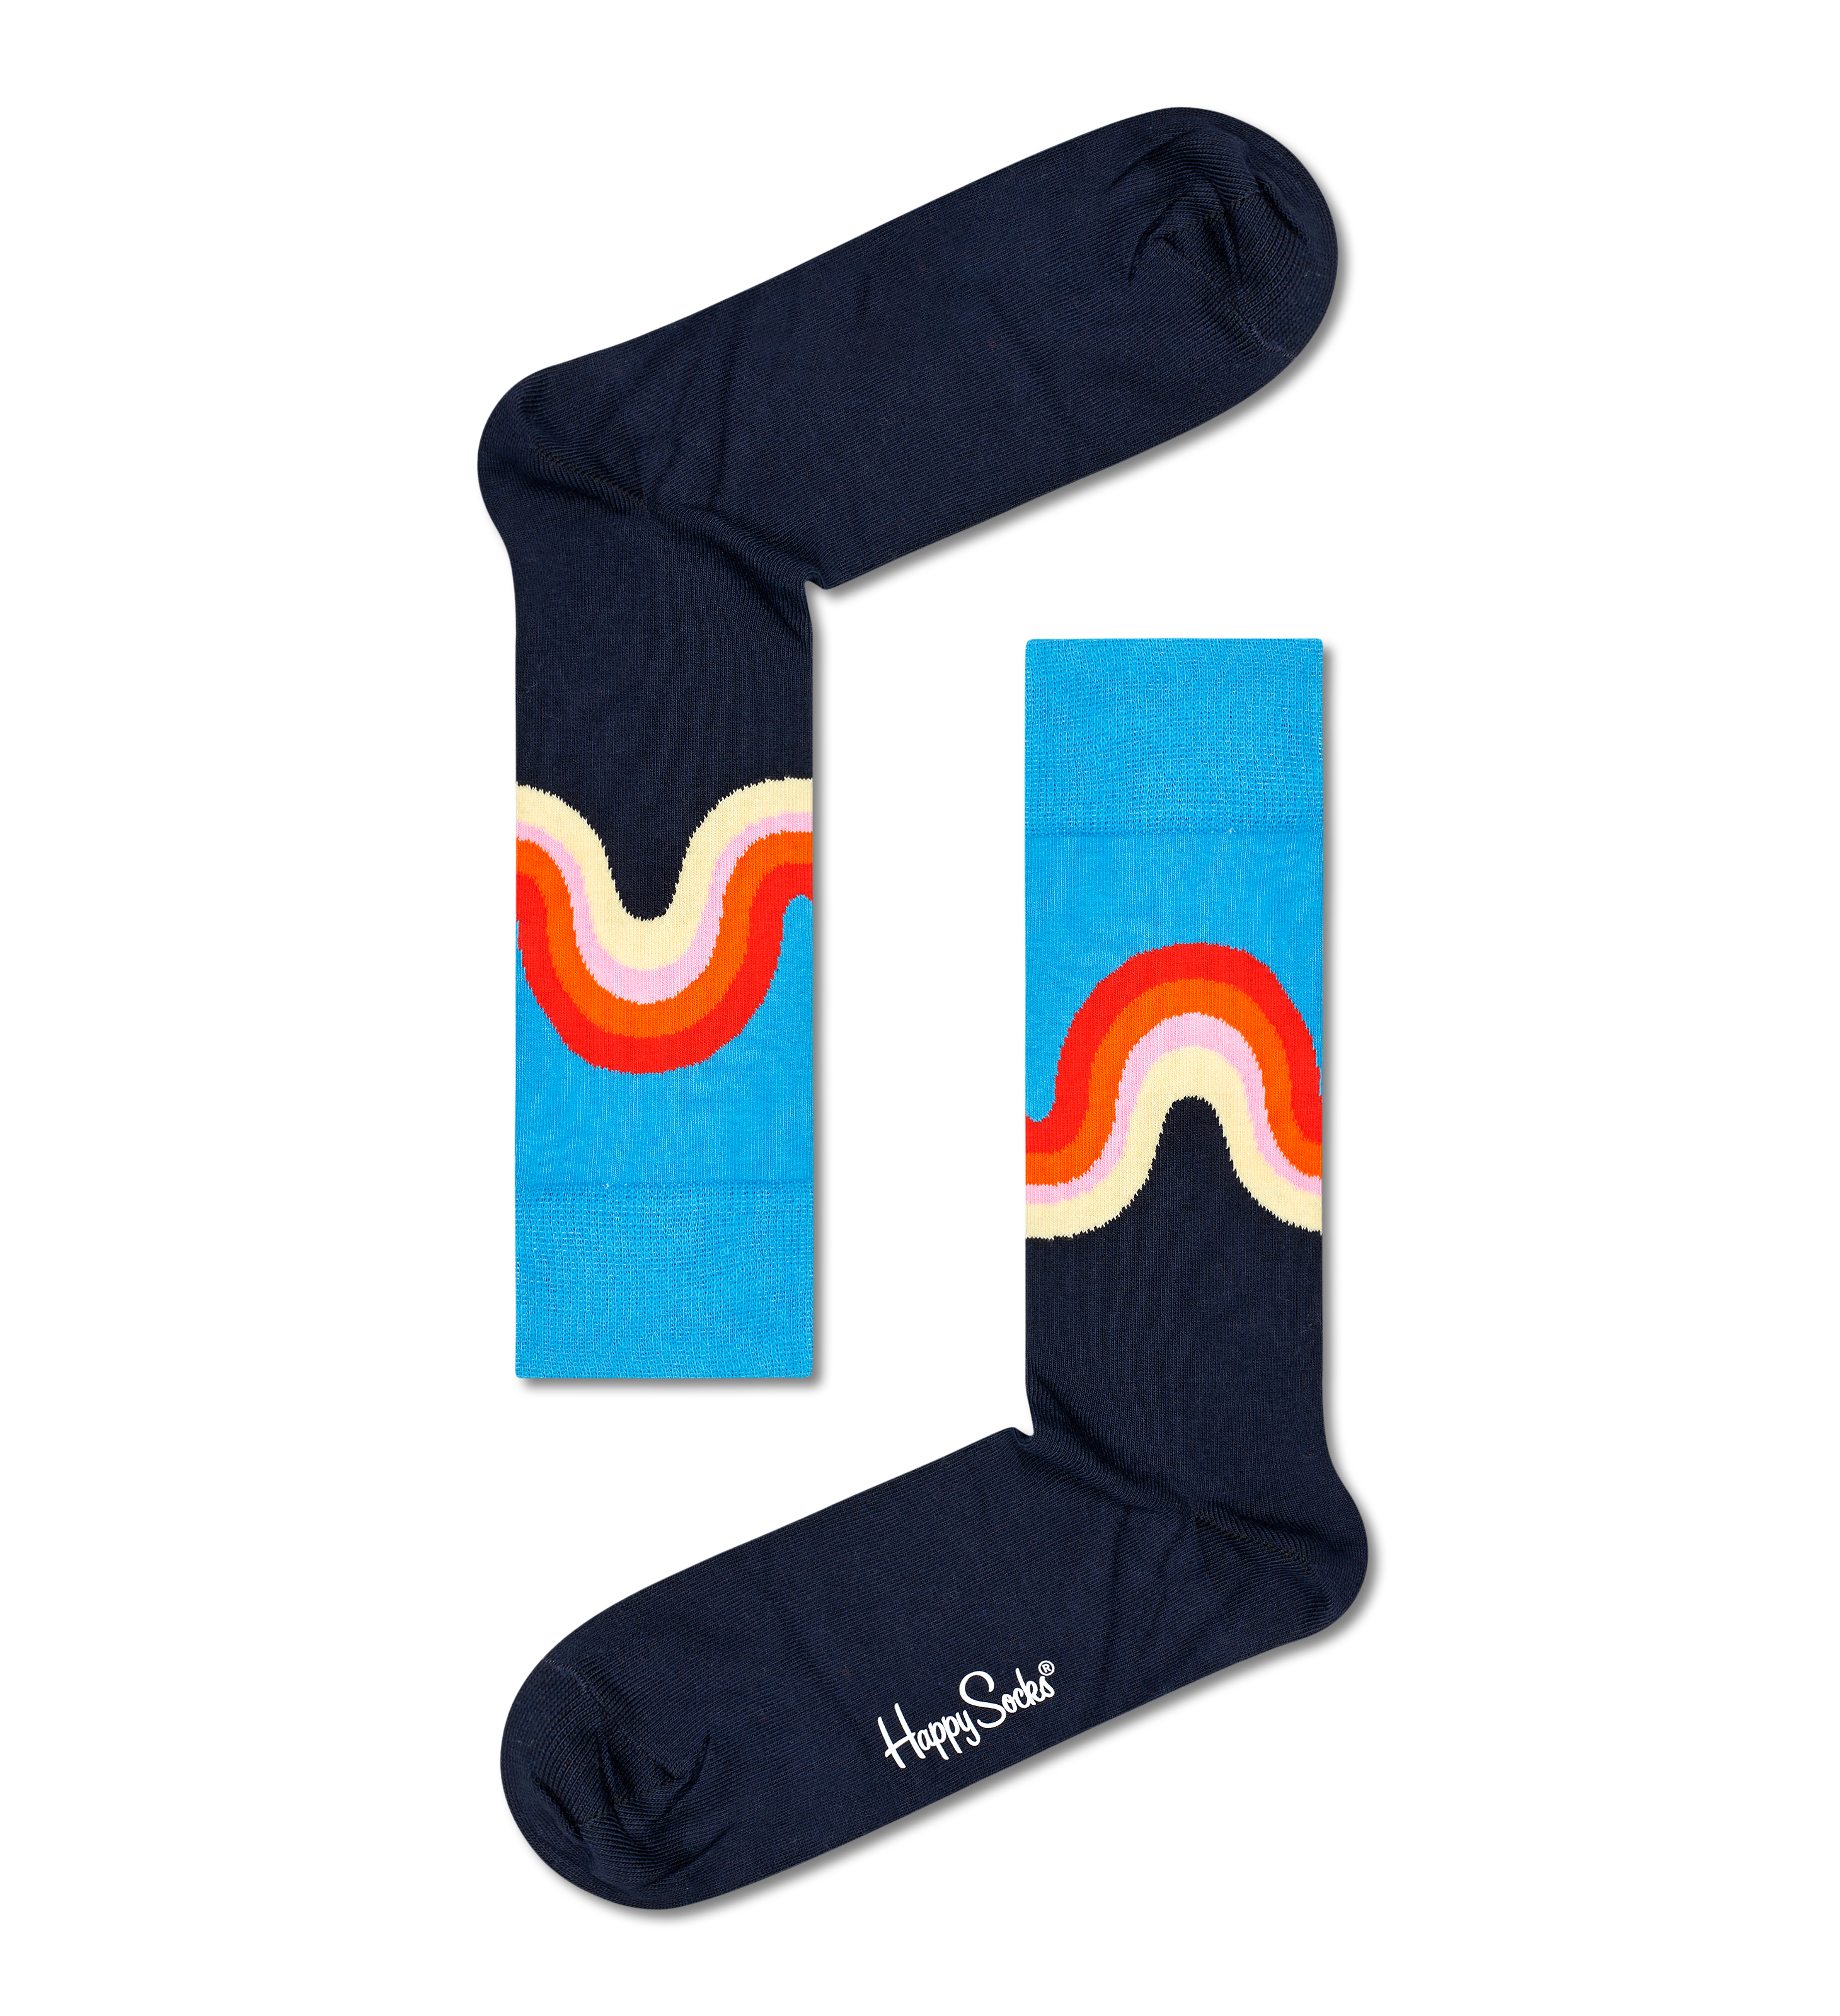 Blue Navy 4-Pack Socks Gift Set | Happy Socks EU